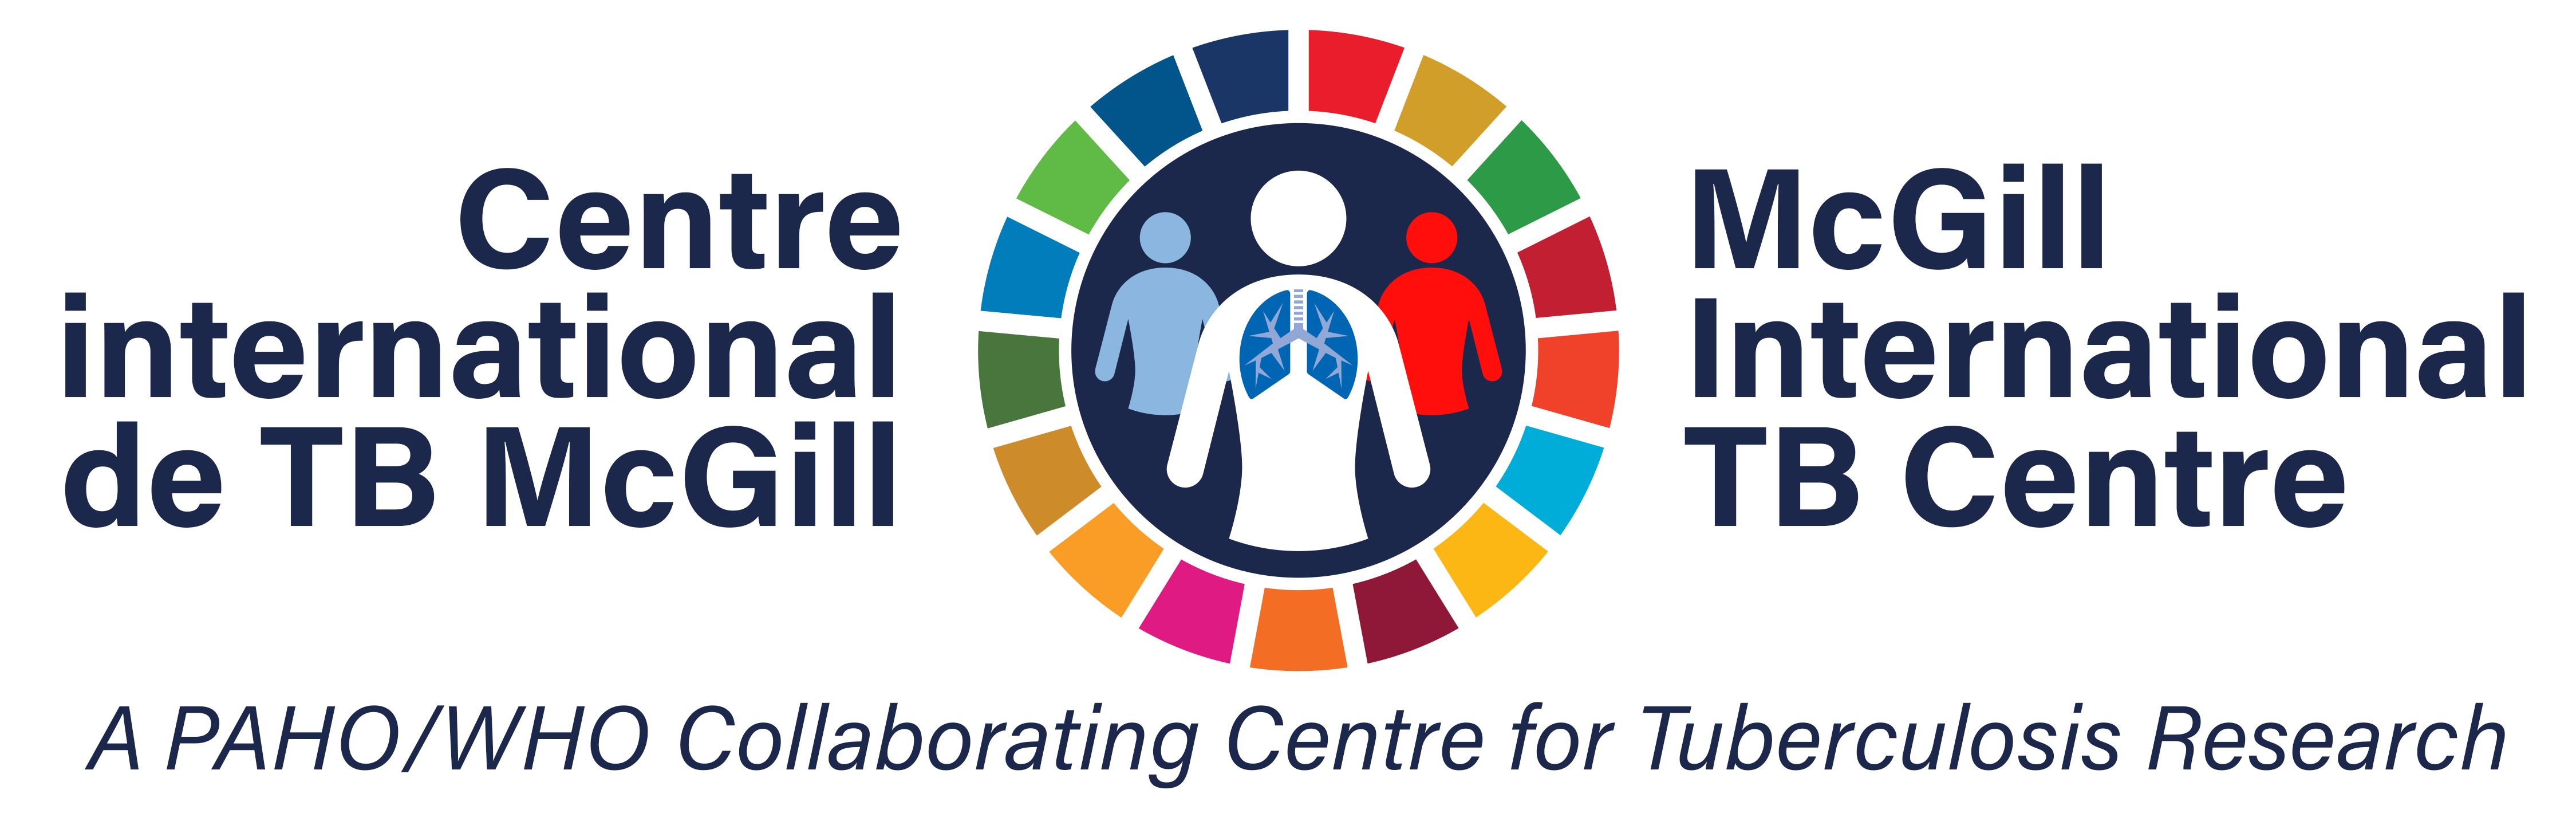 McGill International TB Center logo